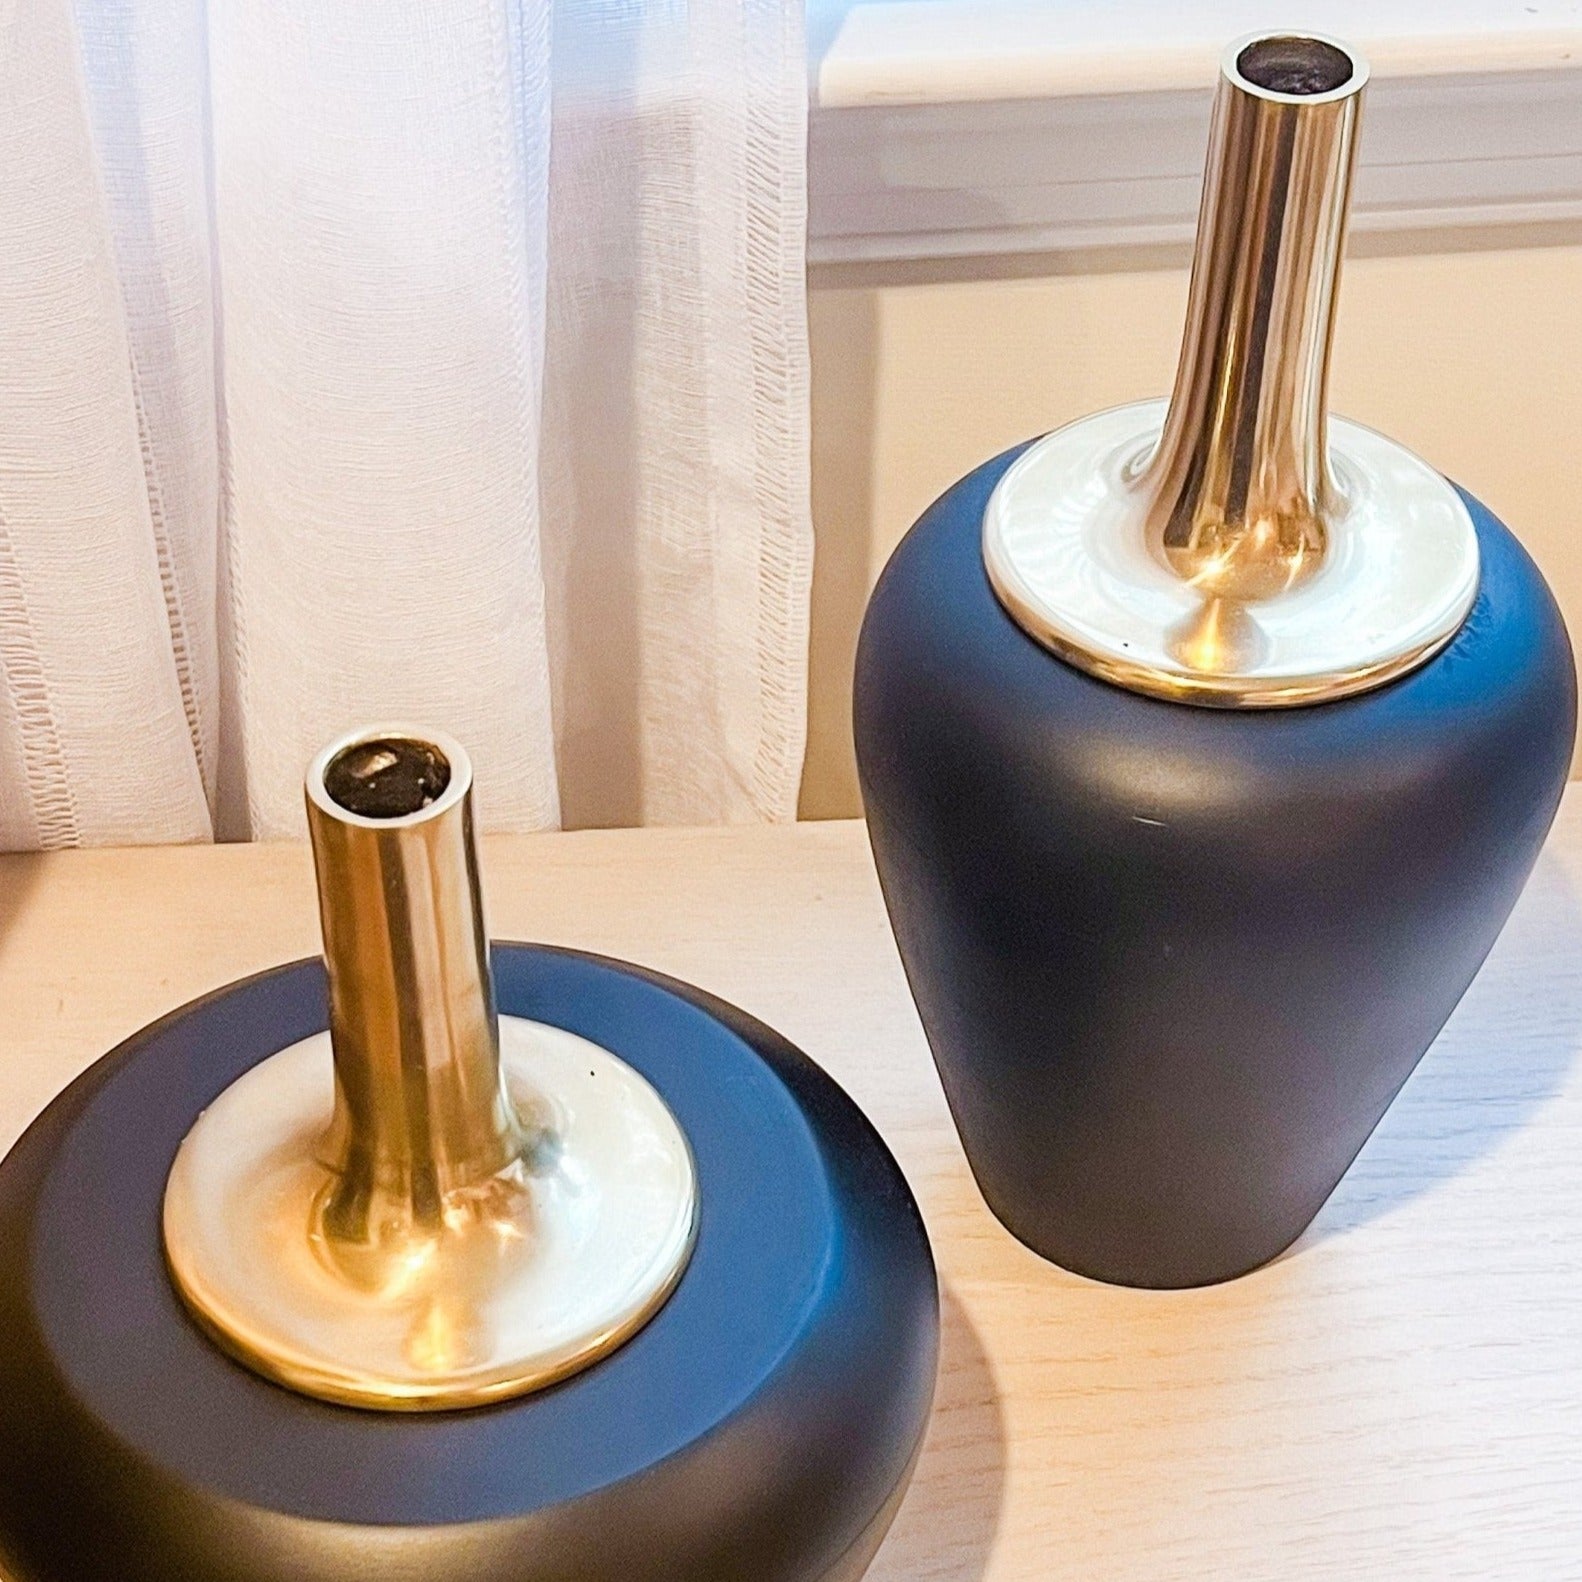 Black Wood Vases w/ long Gold Metal Necks (Set of 2) - DiamondVale